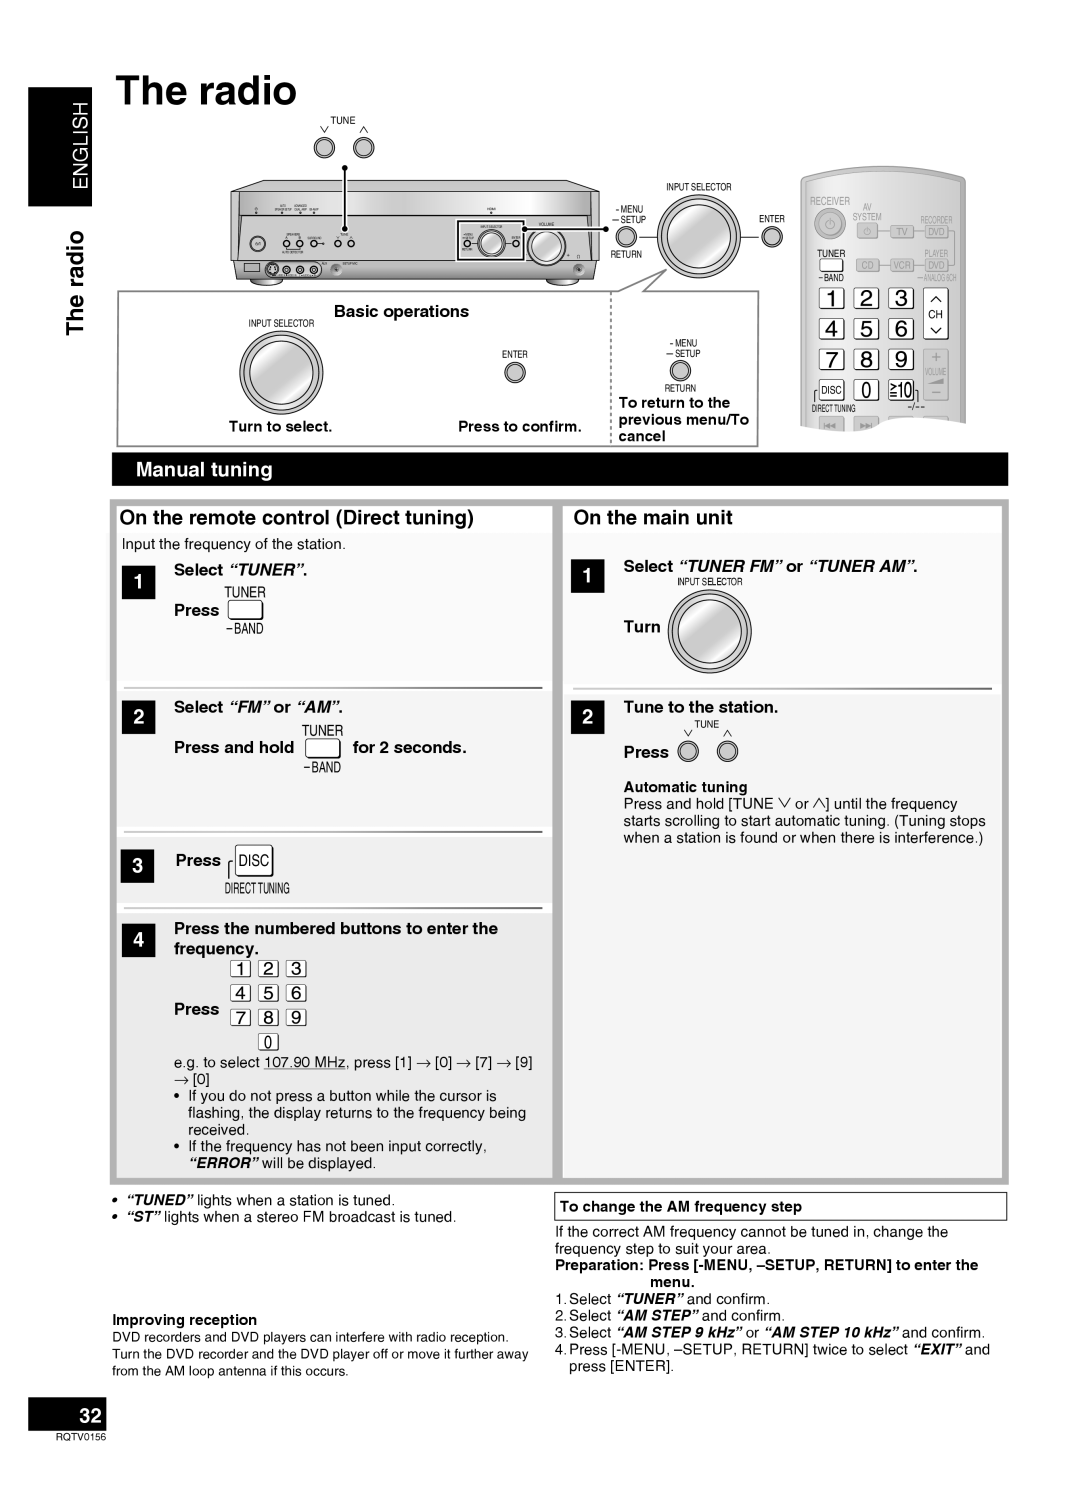 Panasonic SA-XR58 manual The radio, radio ENGLISH, Manual tuning, On the remote control Direct tuning, On the main unit 